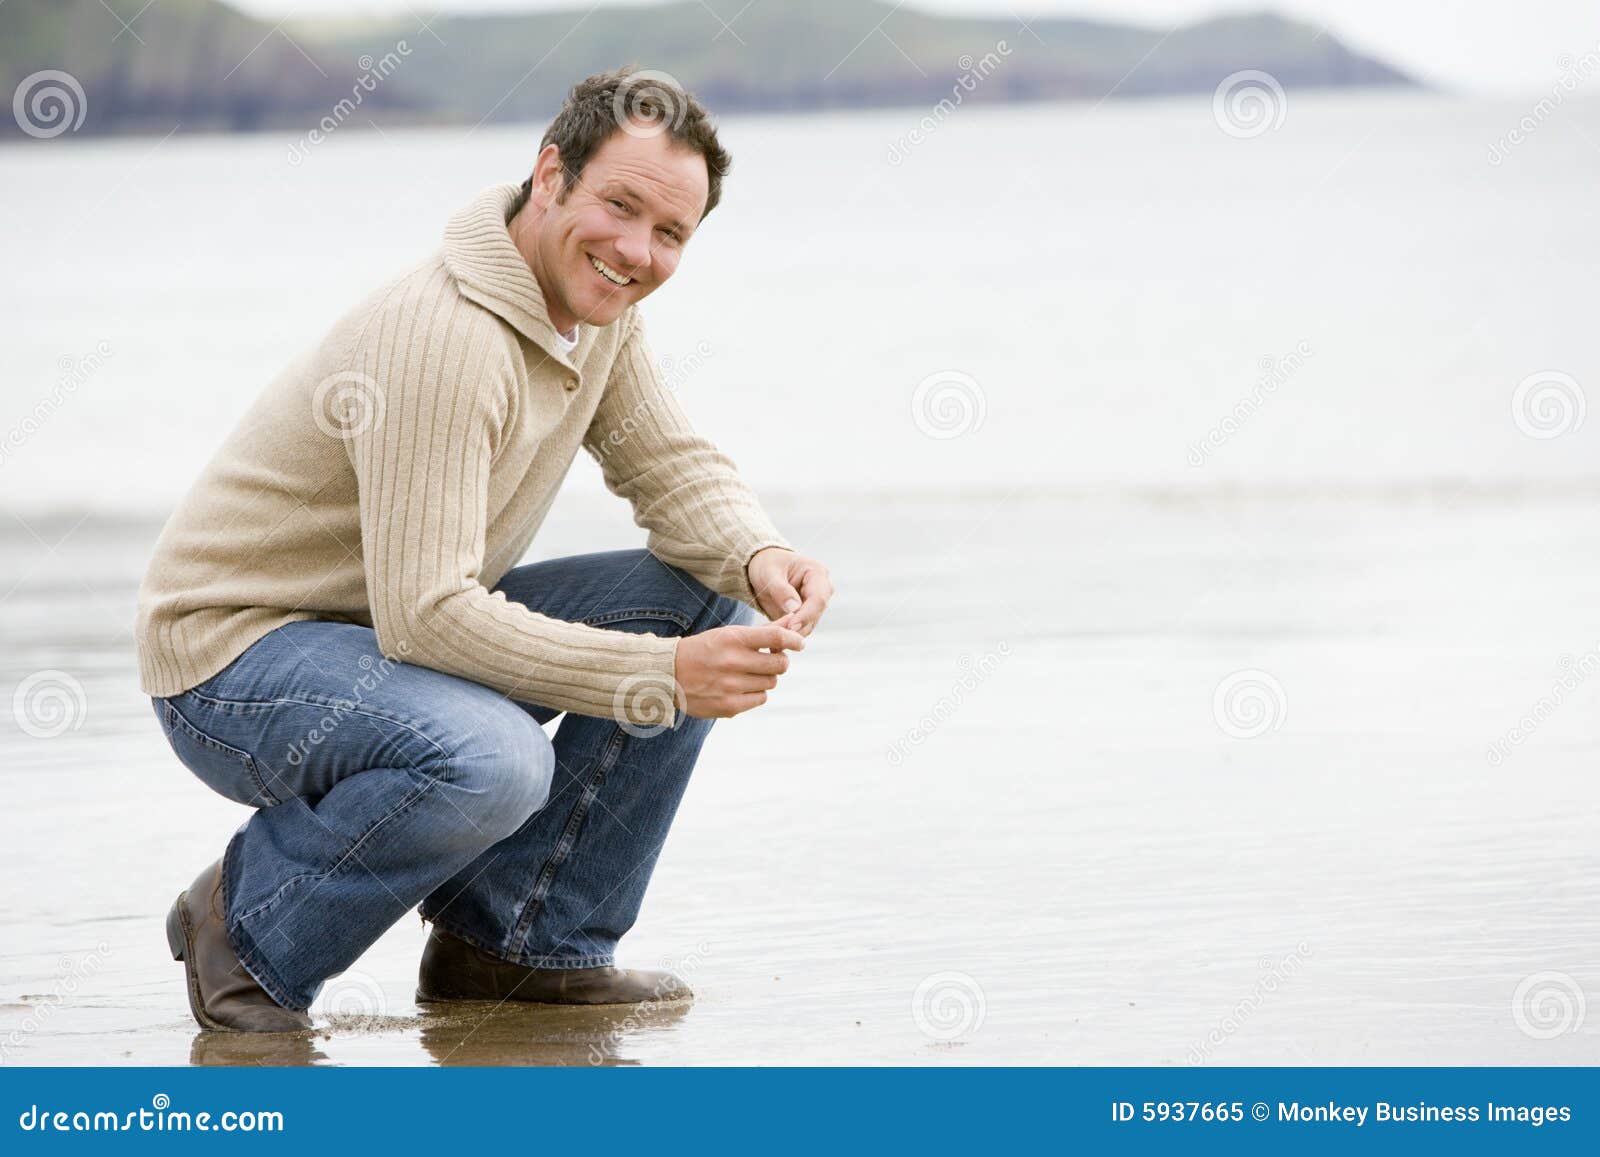 man crouching on beach